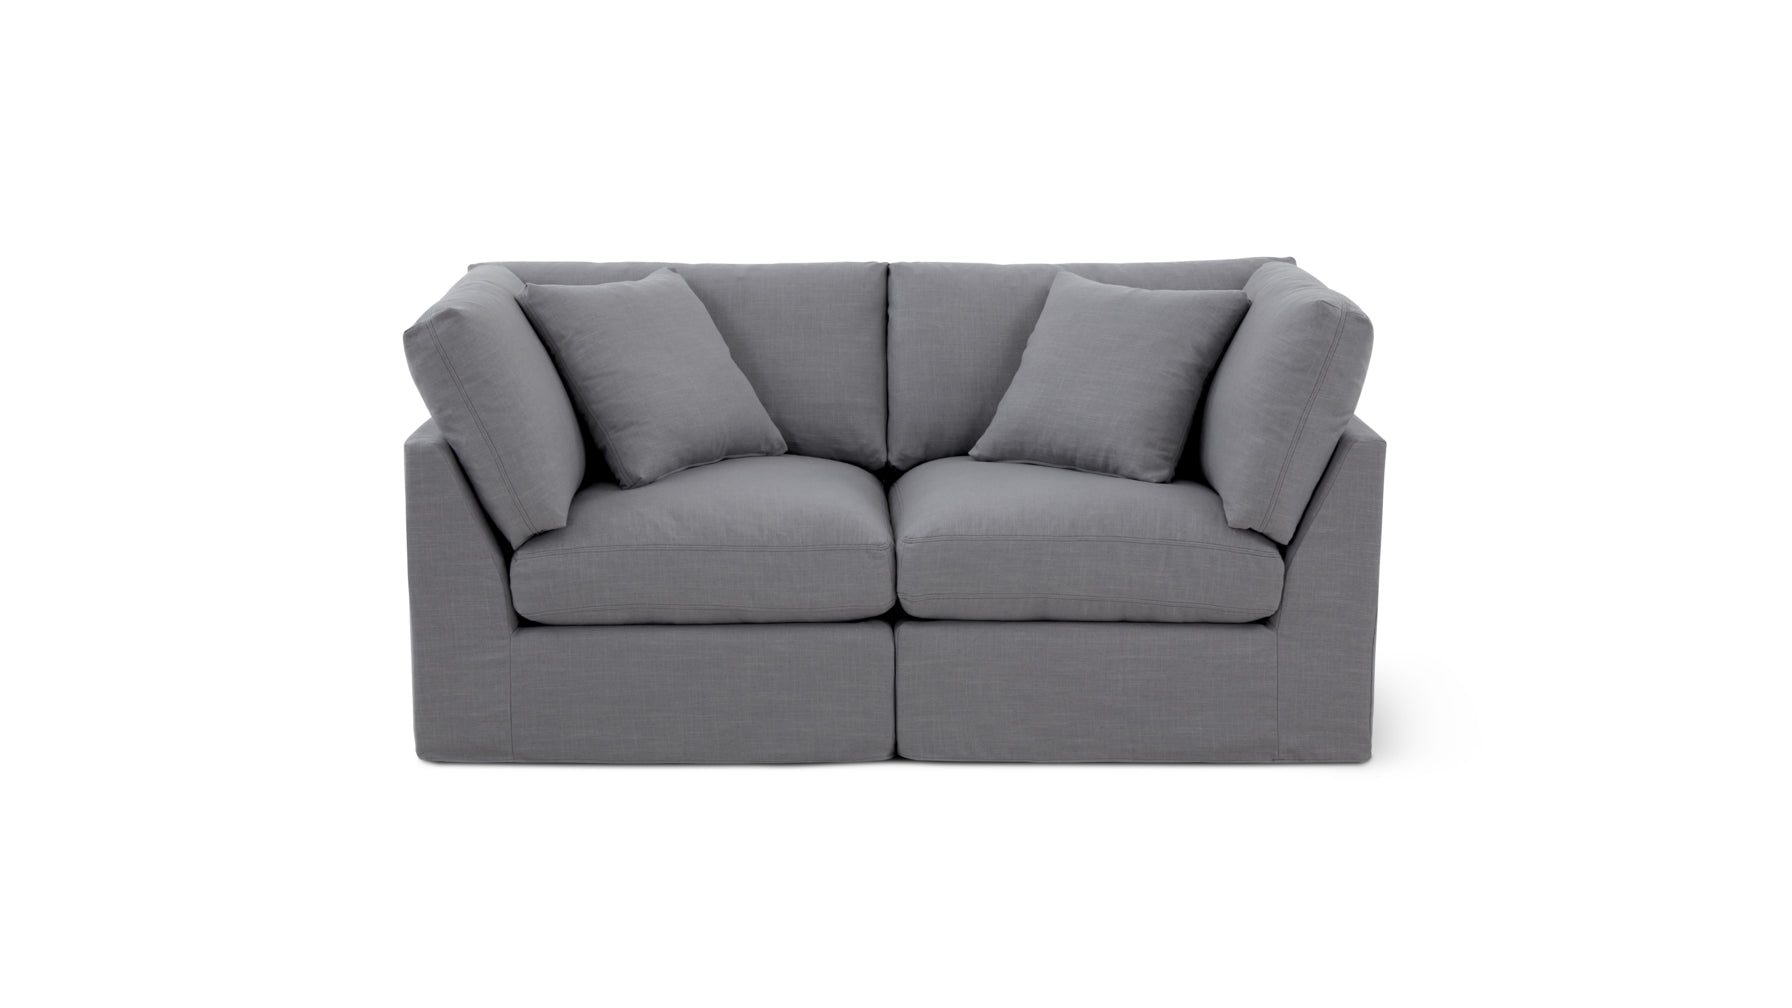 Get Together™ 2-Piece Modular Sofa, Standard, Moonlight - Image 1